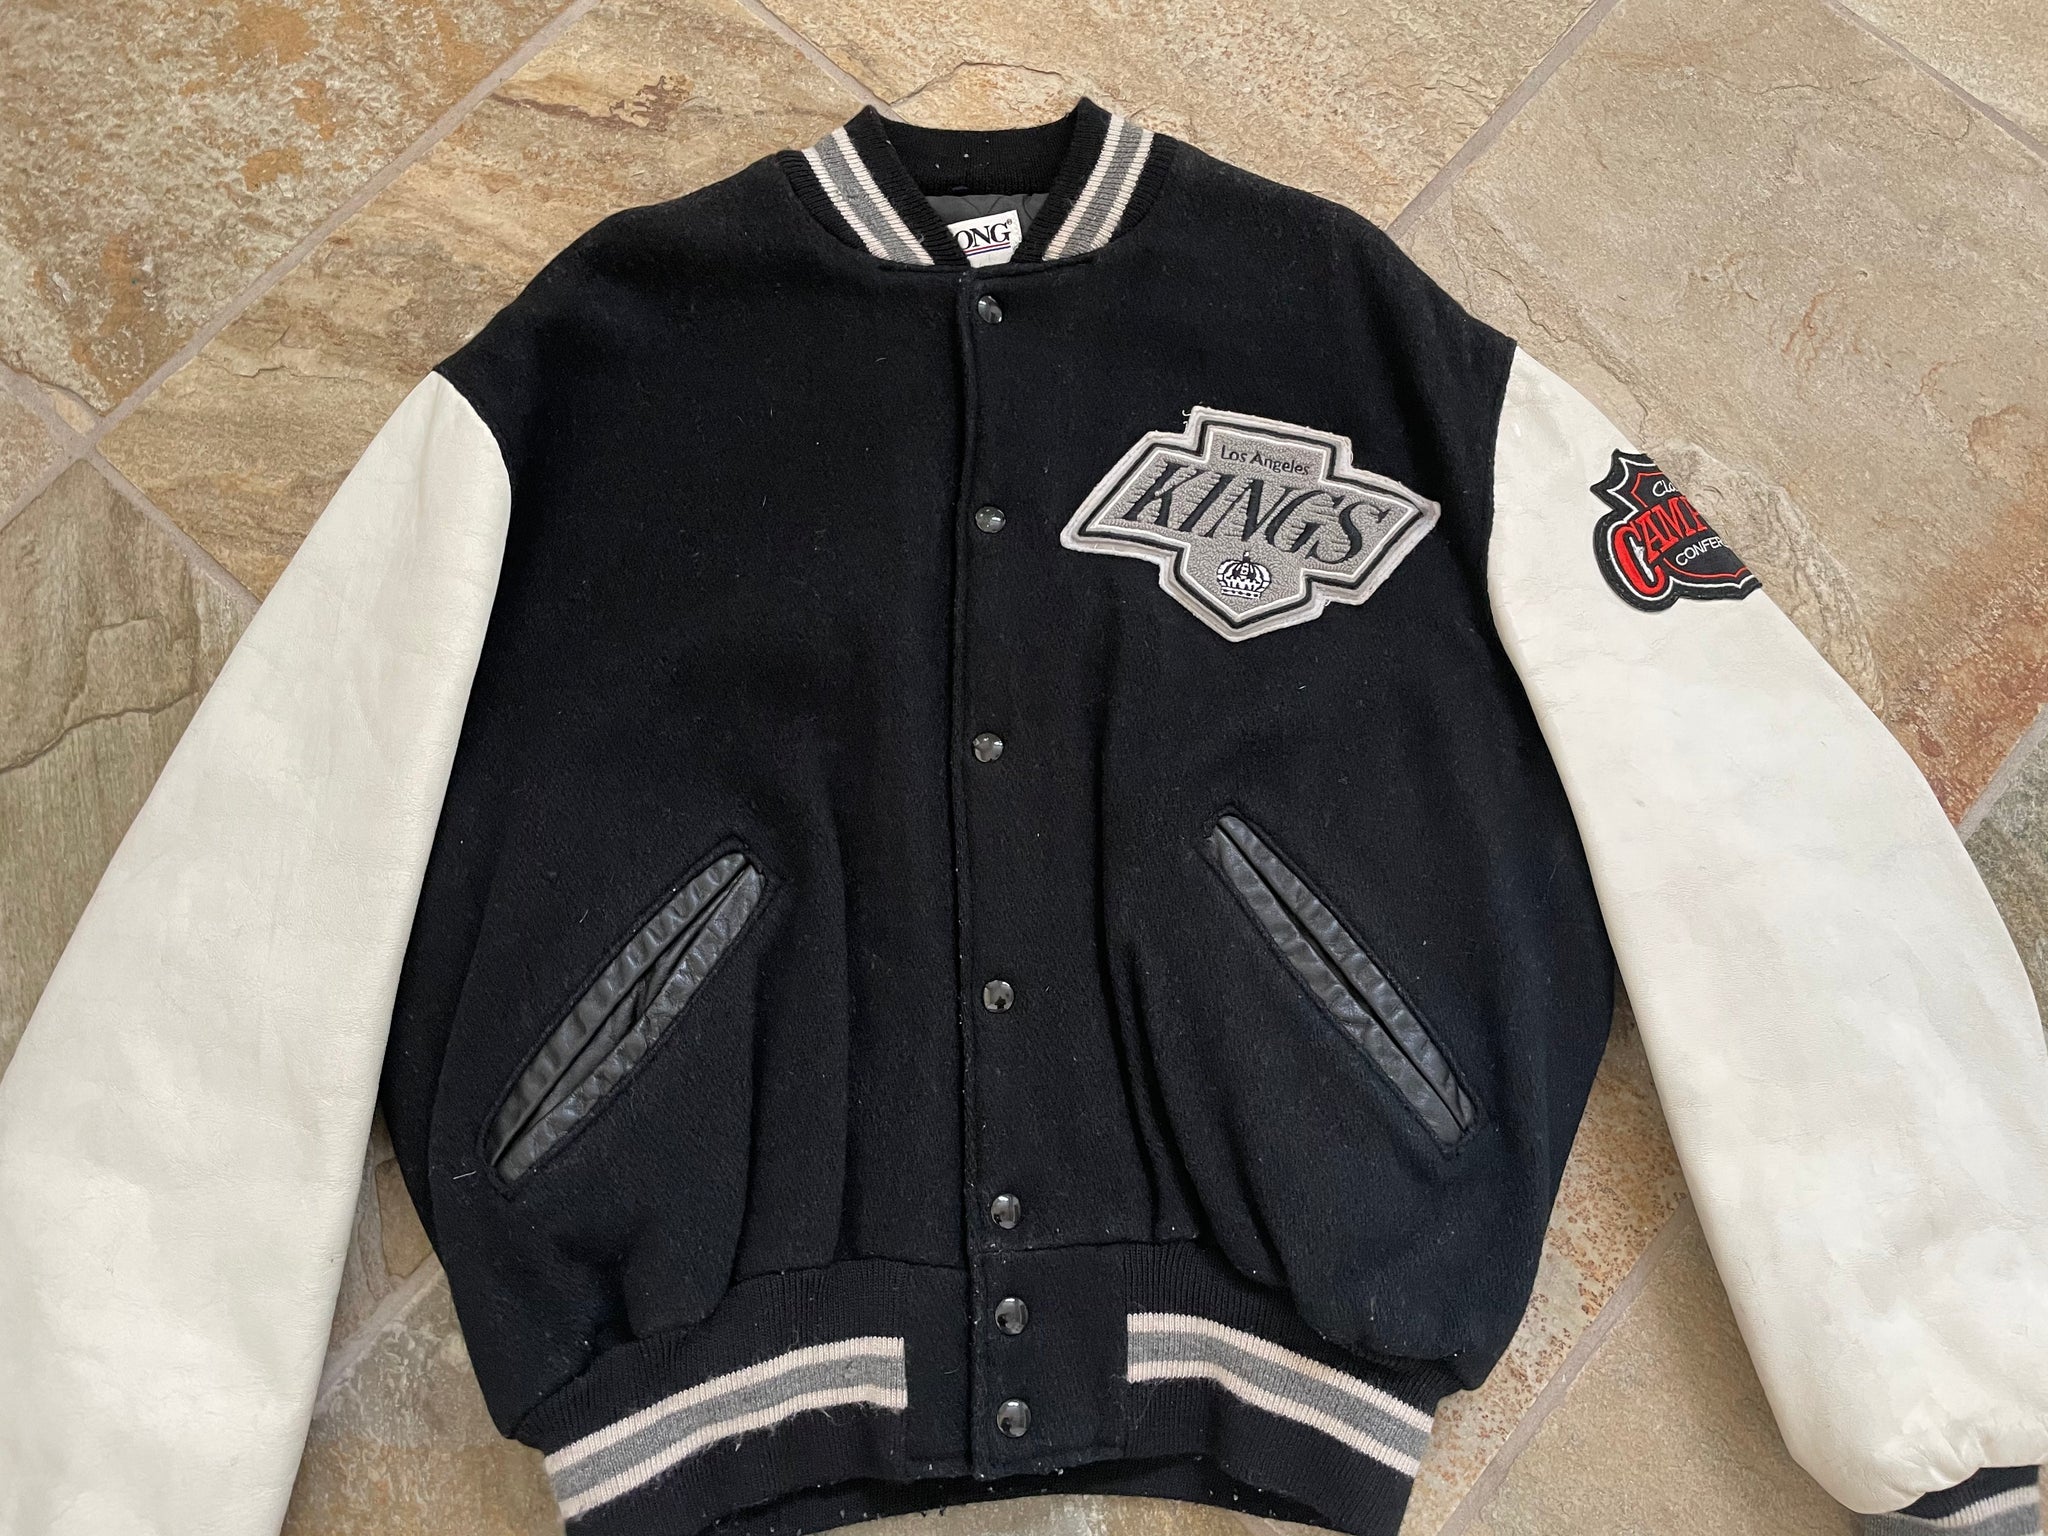 Cinder Road Co. - Vintage 1990 LA Kings Jacket August 1990